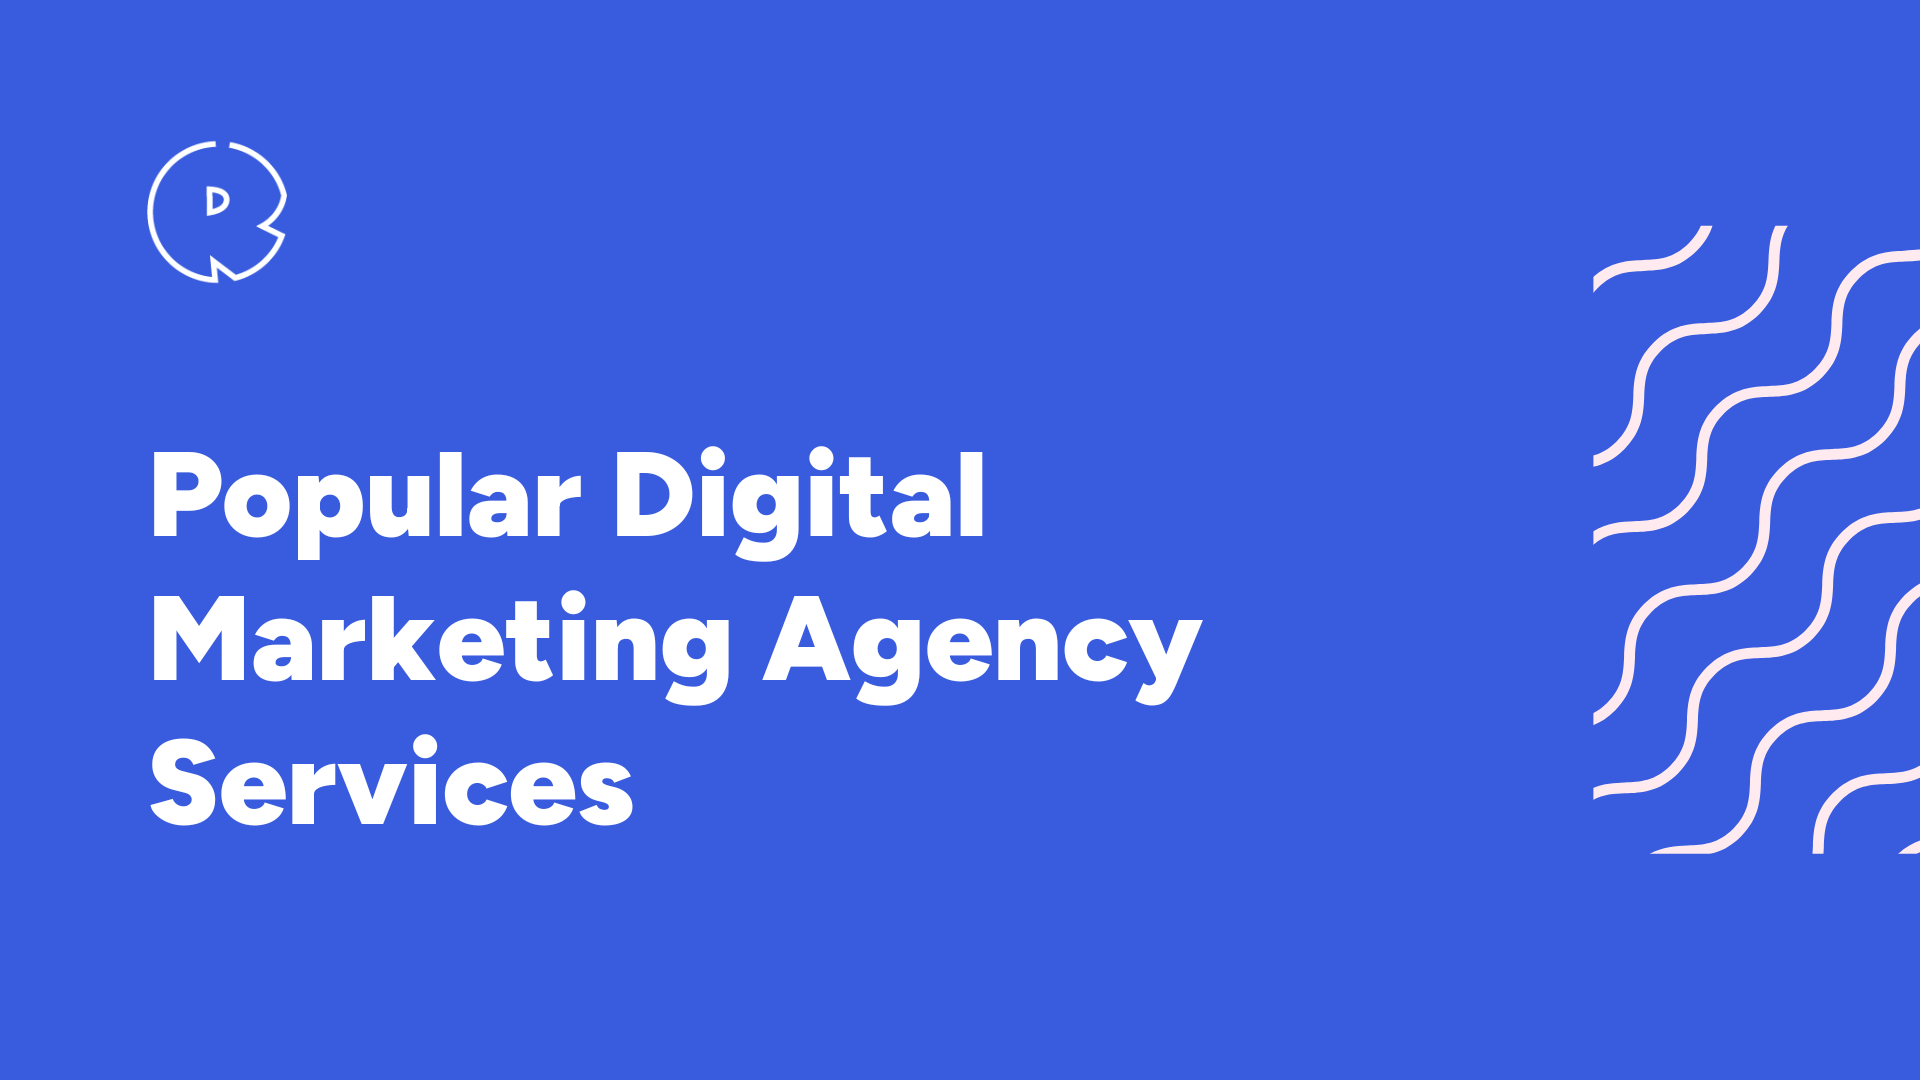 Popular Digital Marketing Agency Services